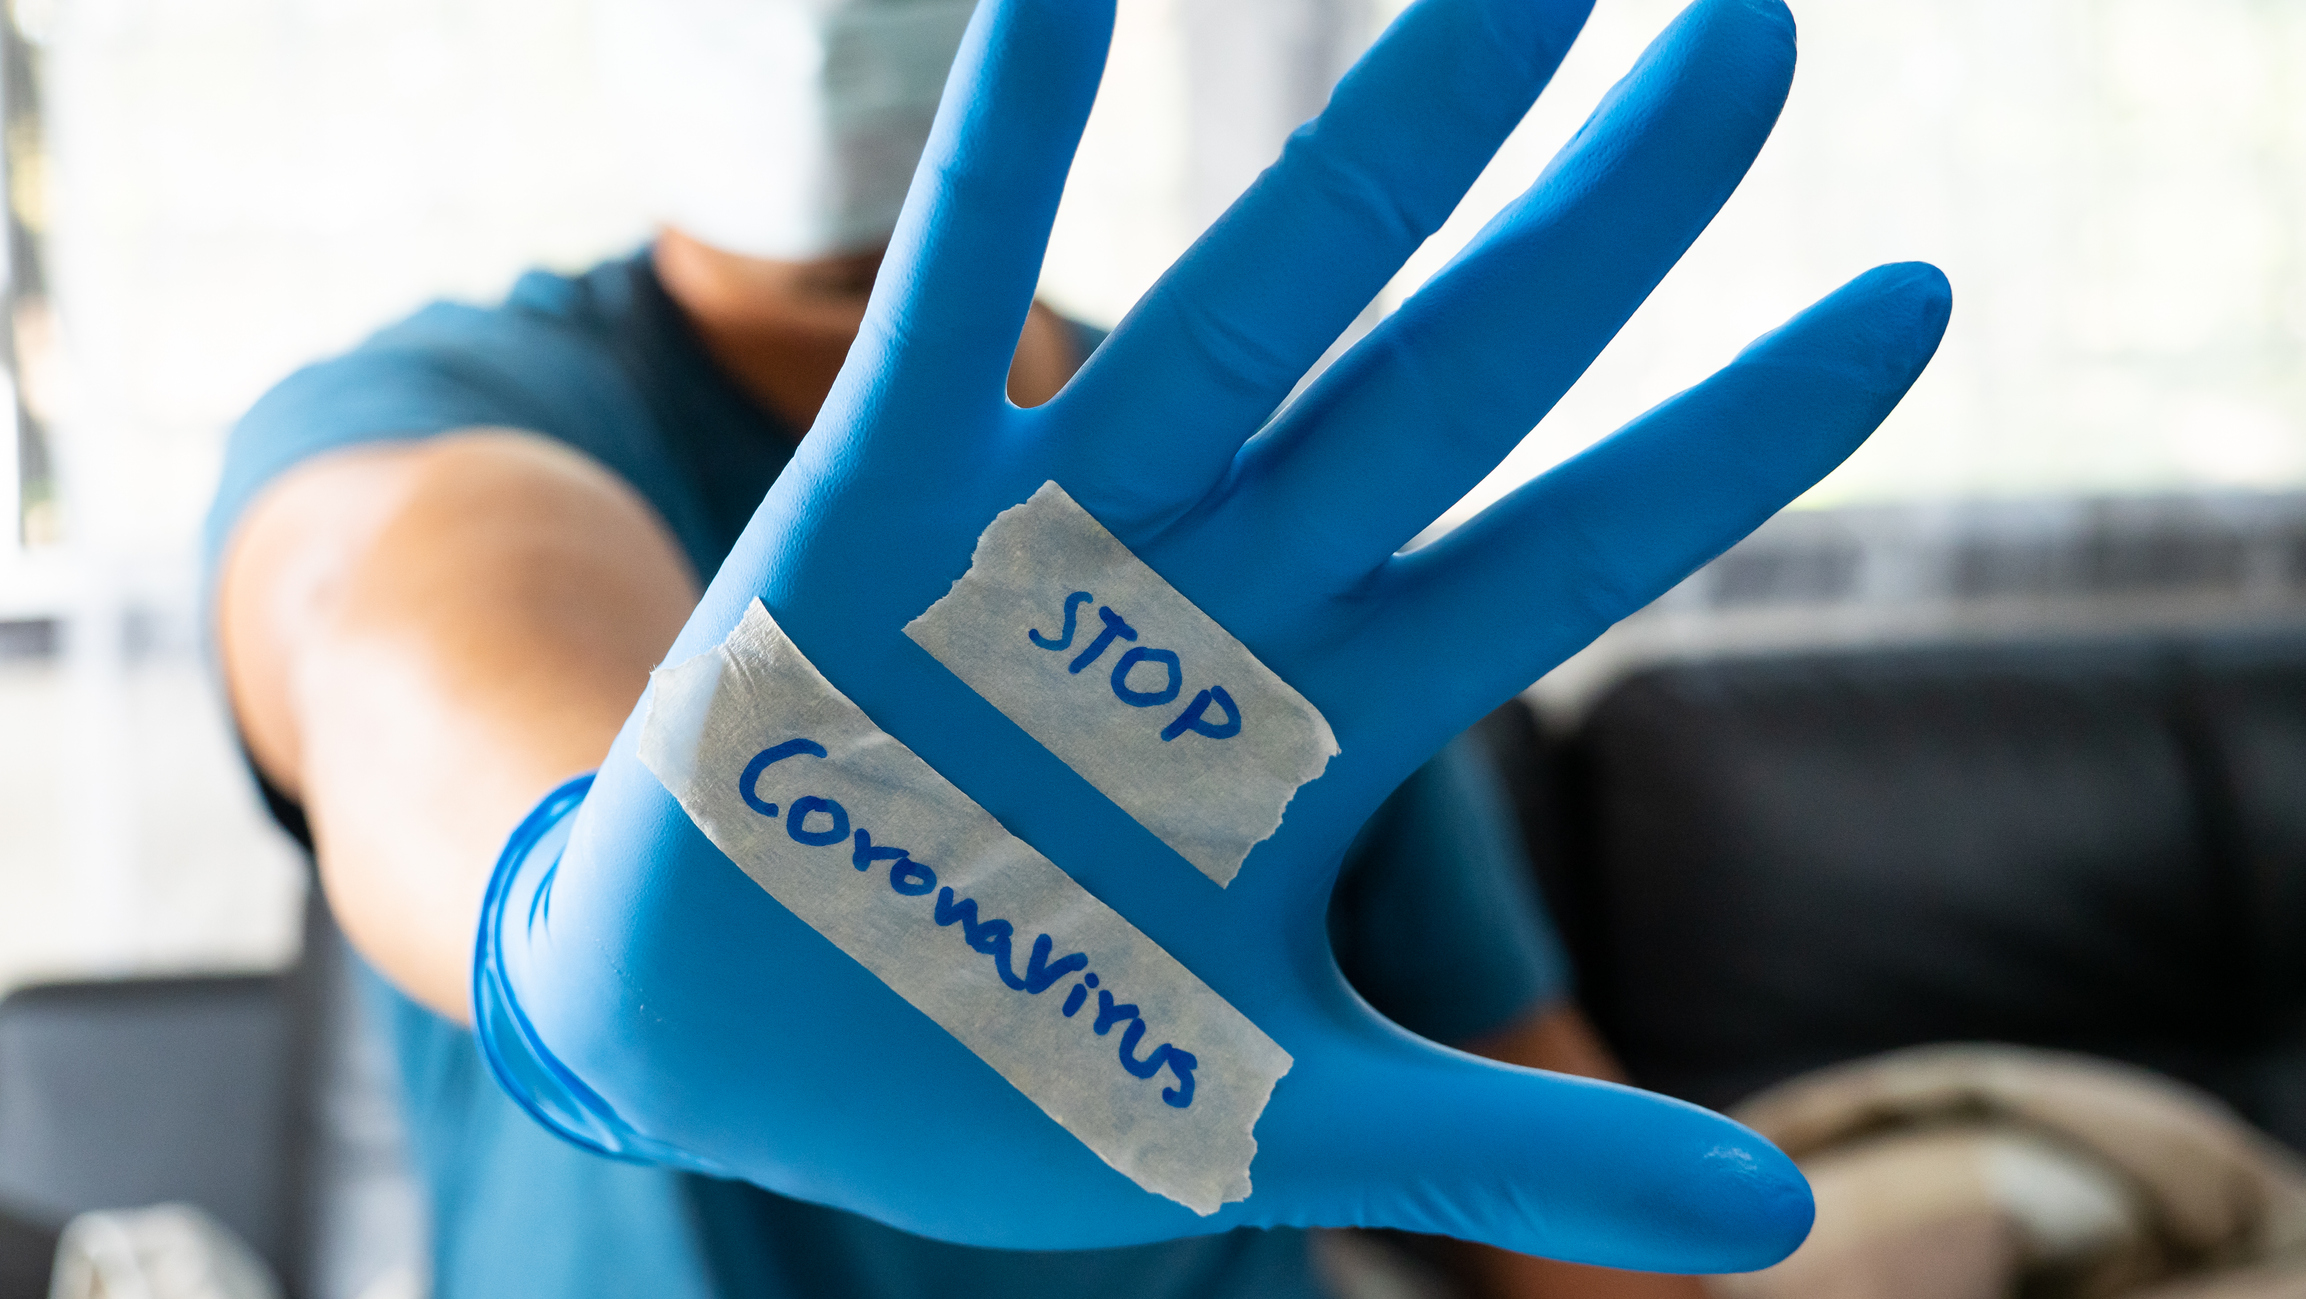 Upl52259880.jpg (The glove-wearer has a message to stop the Coronavirus)